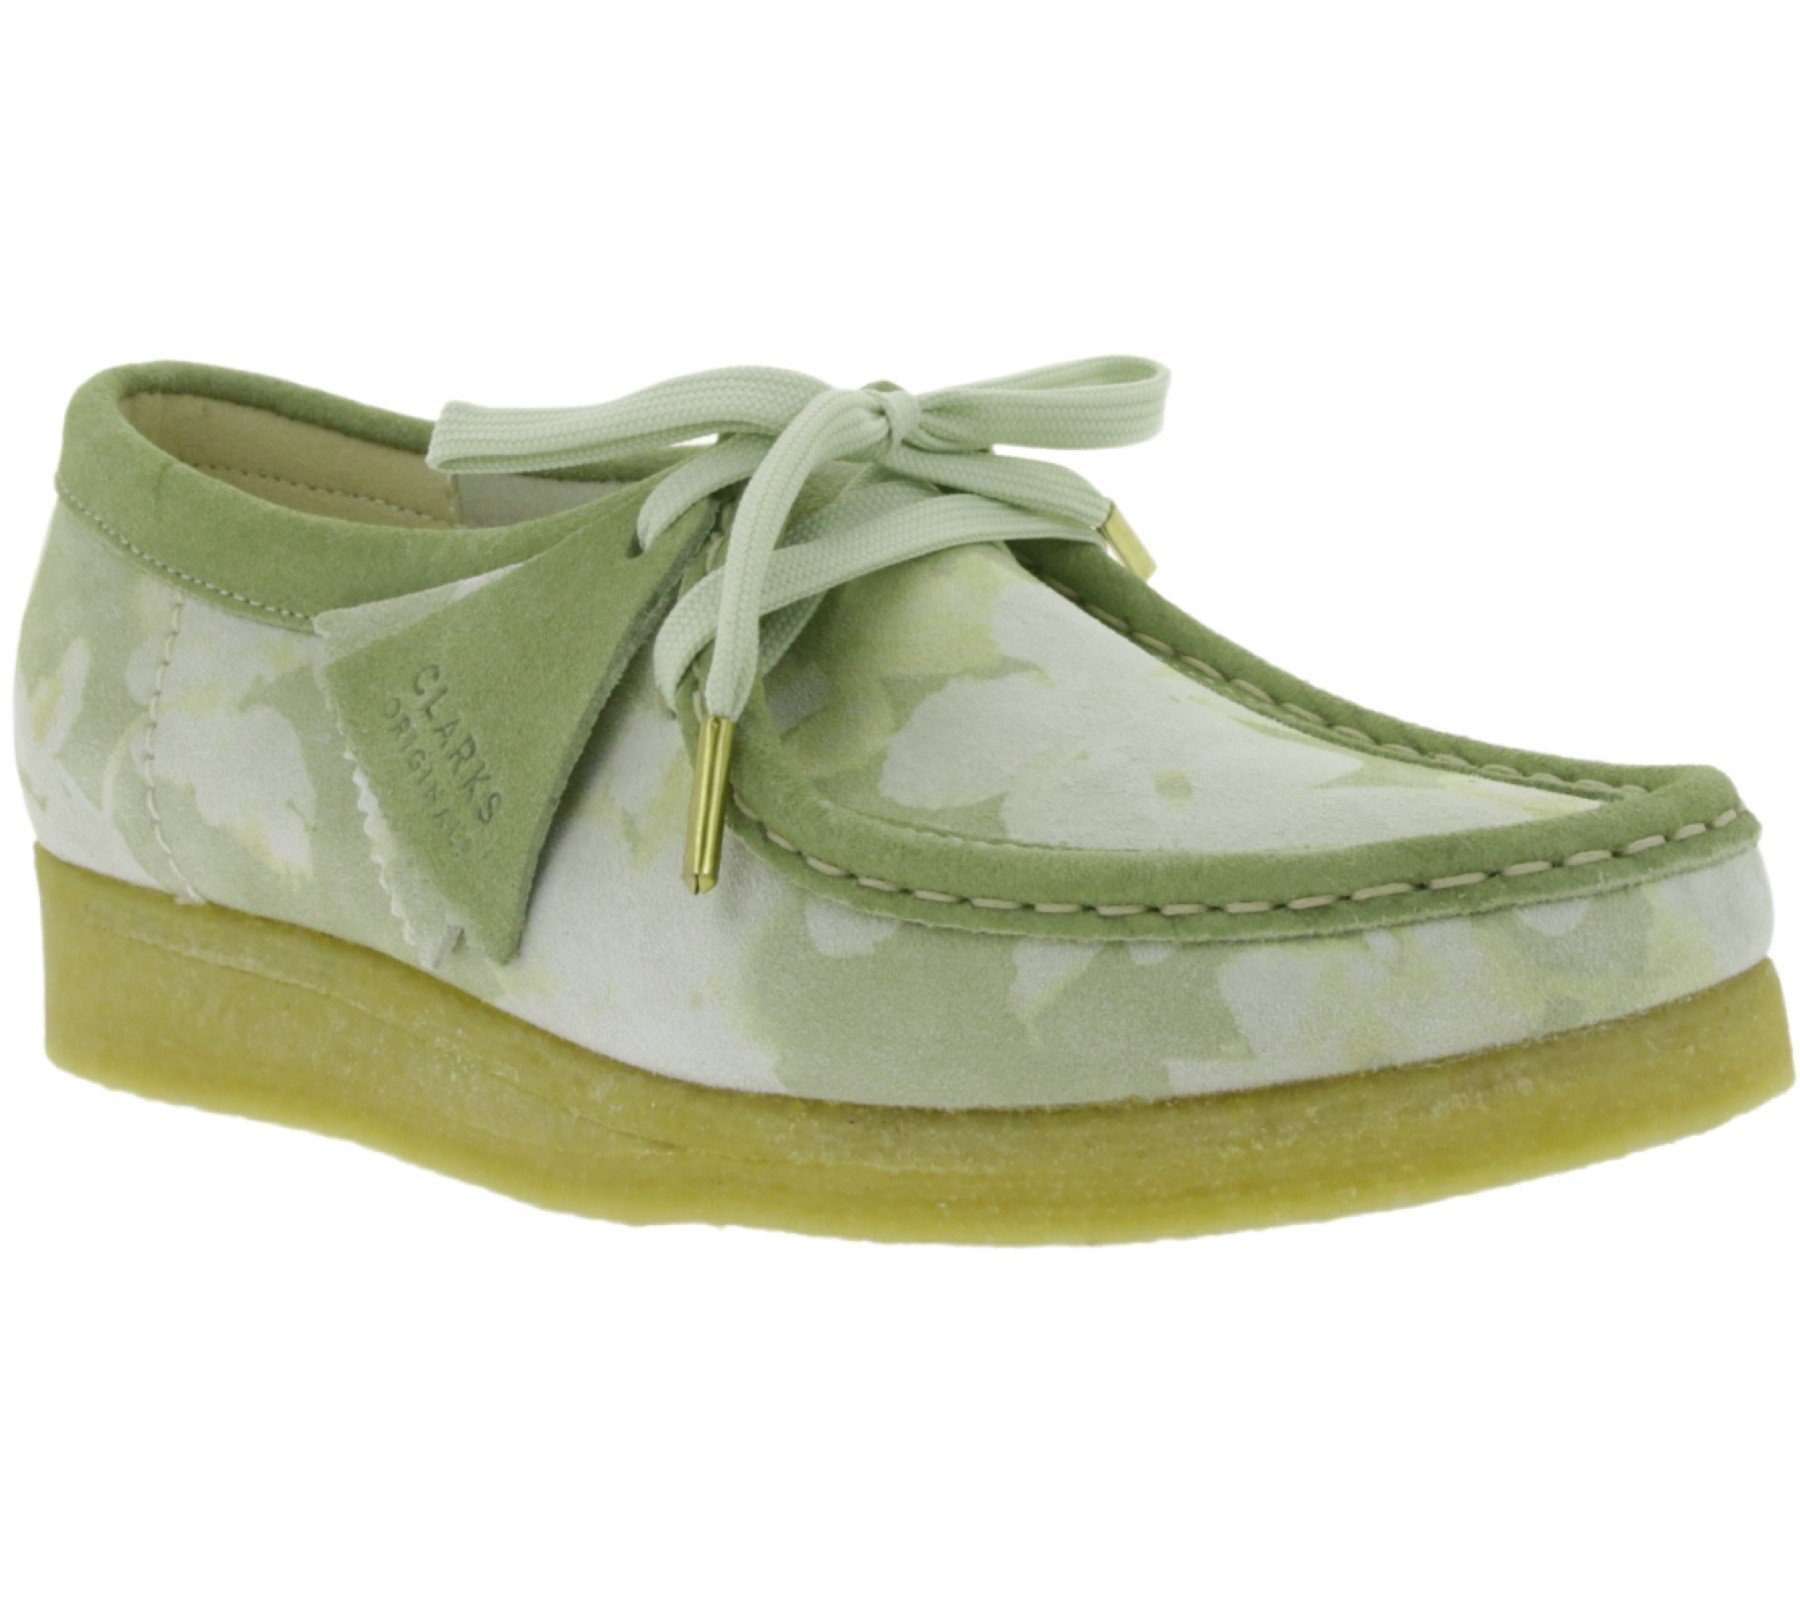 Clarks floralem Wallabee Halbschuhe Muster Damen Originals Clarks Schnürschuh Grün mit Echtleder-Bootsschuhe Schnürschuhe